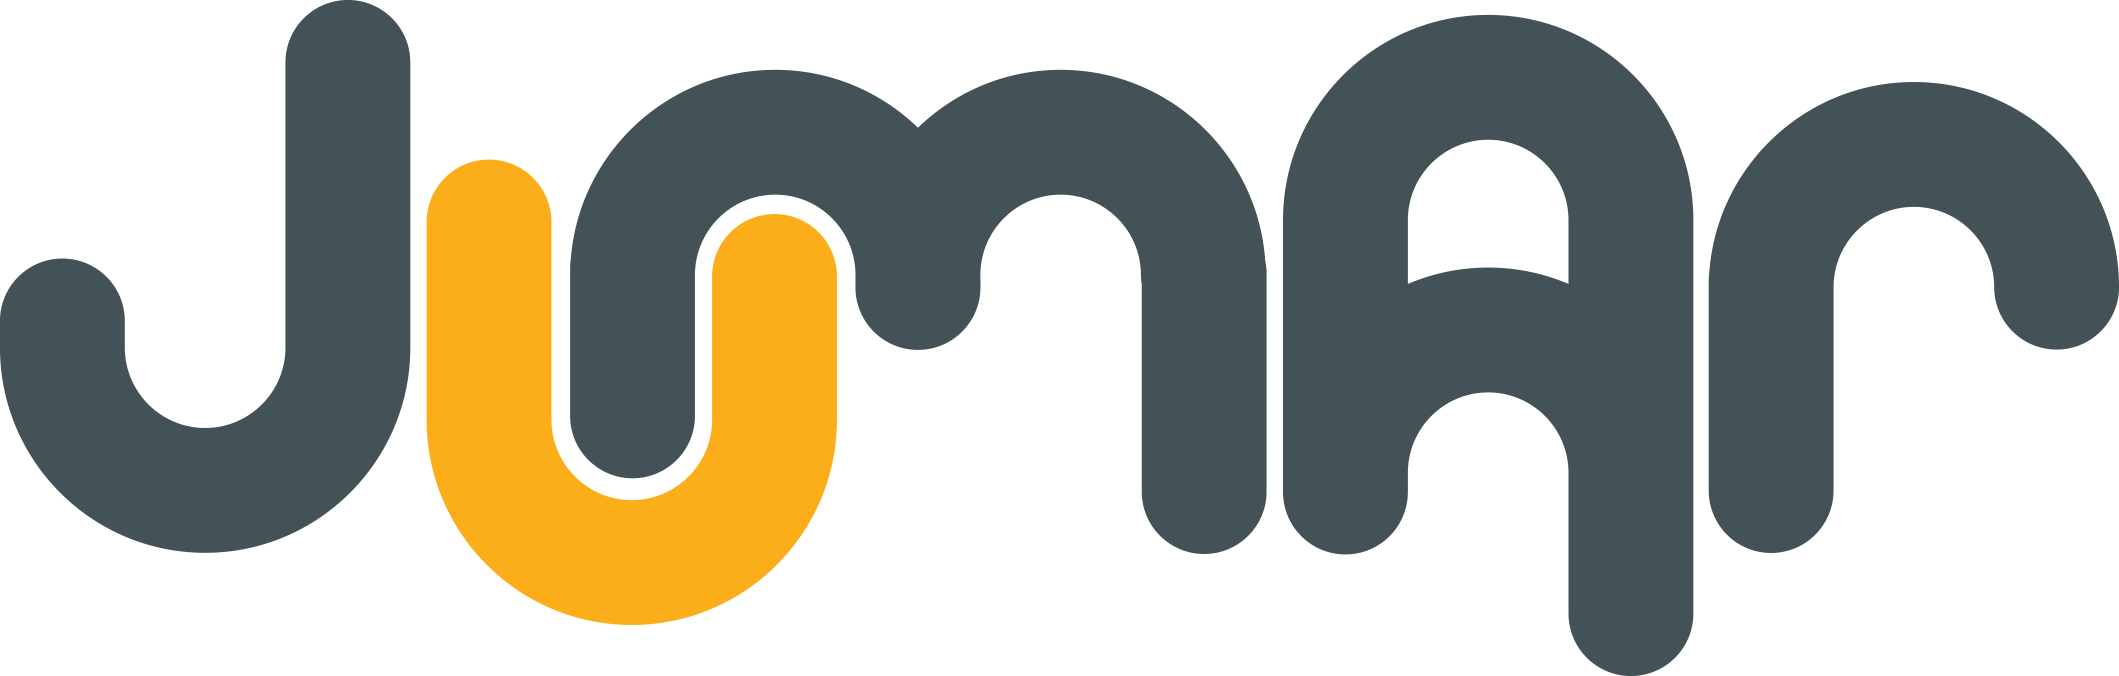 Jumar-logo